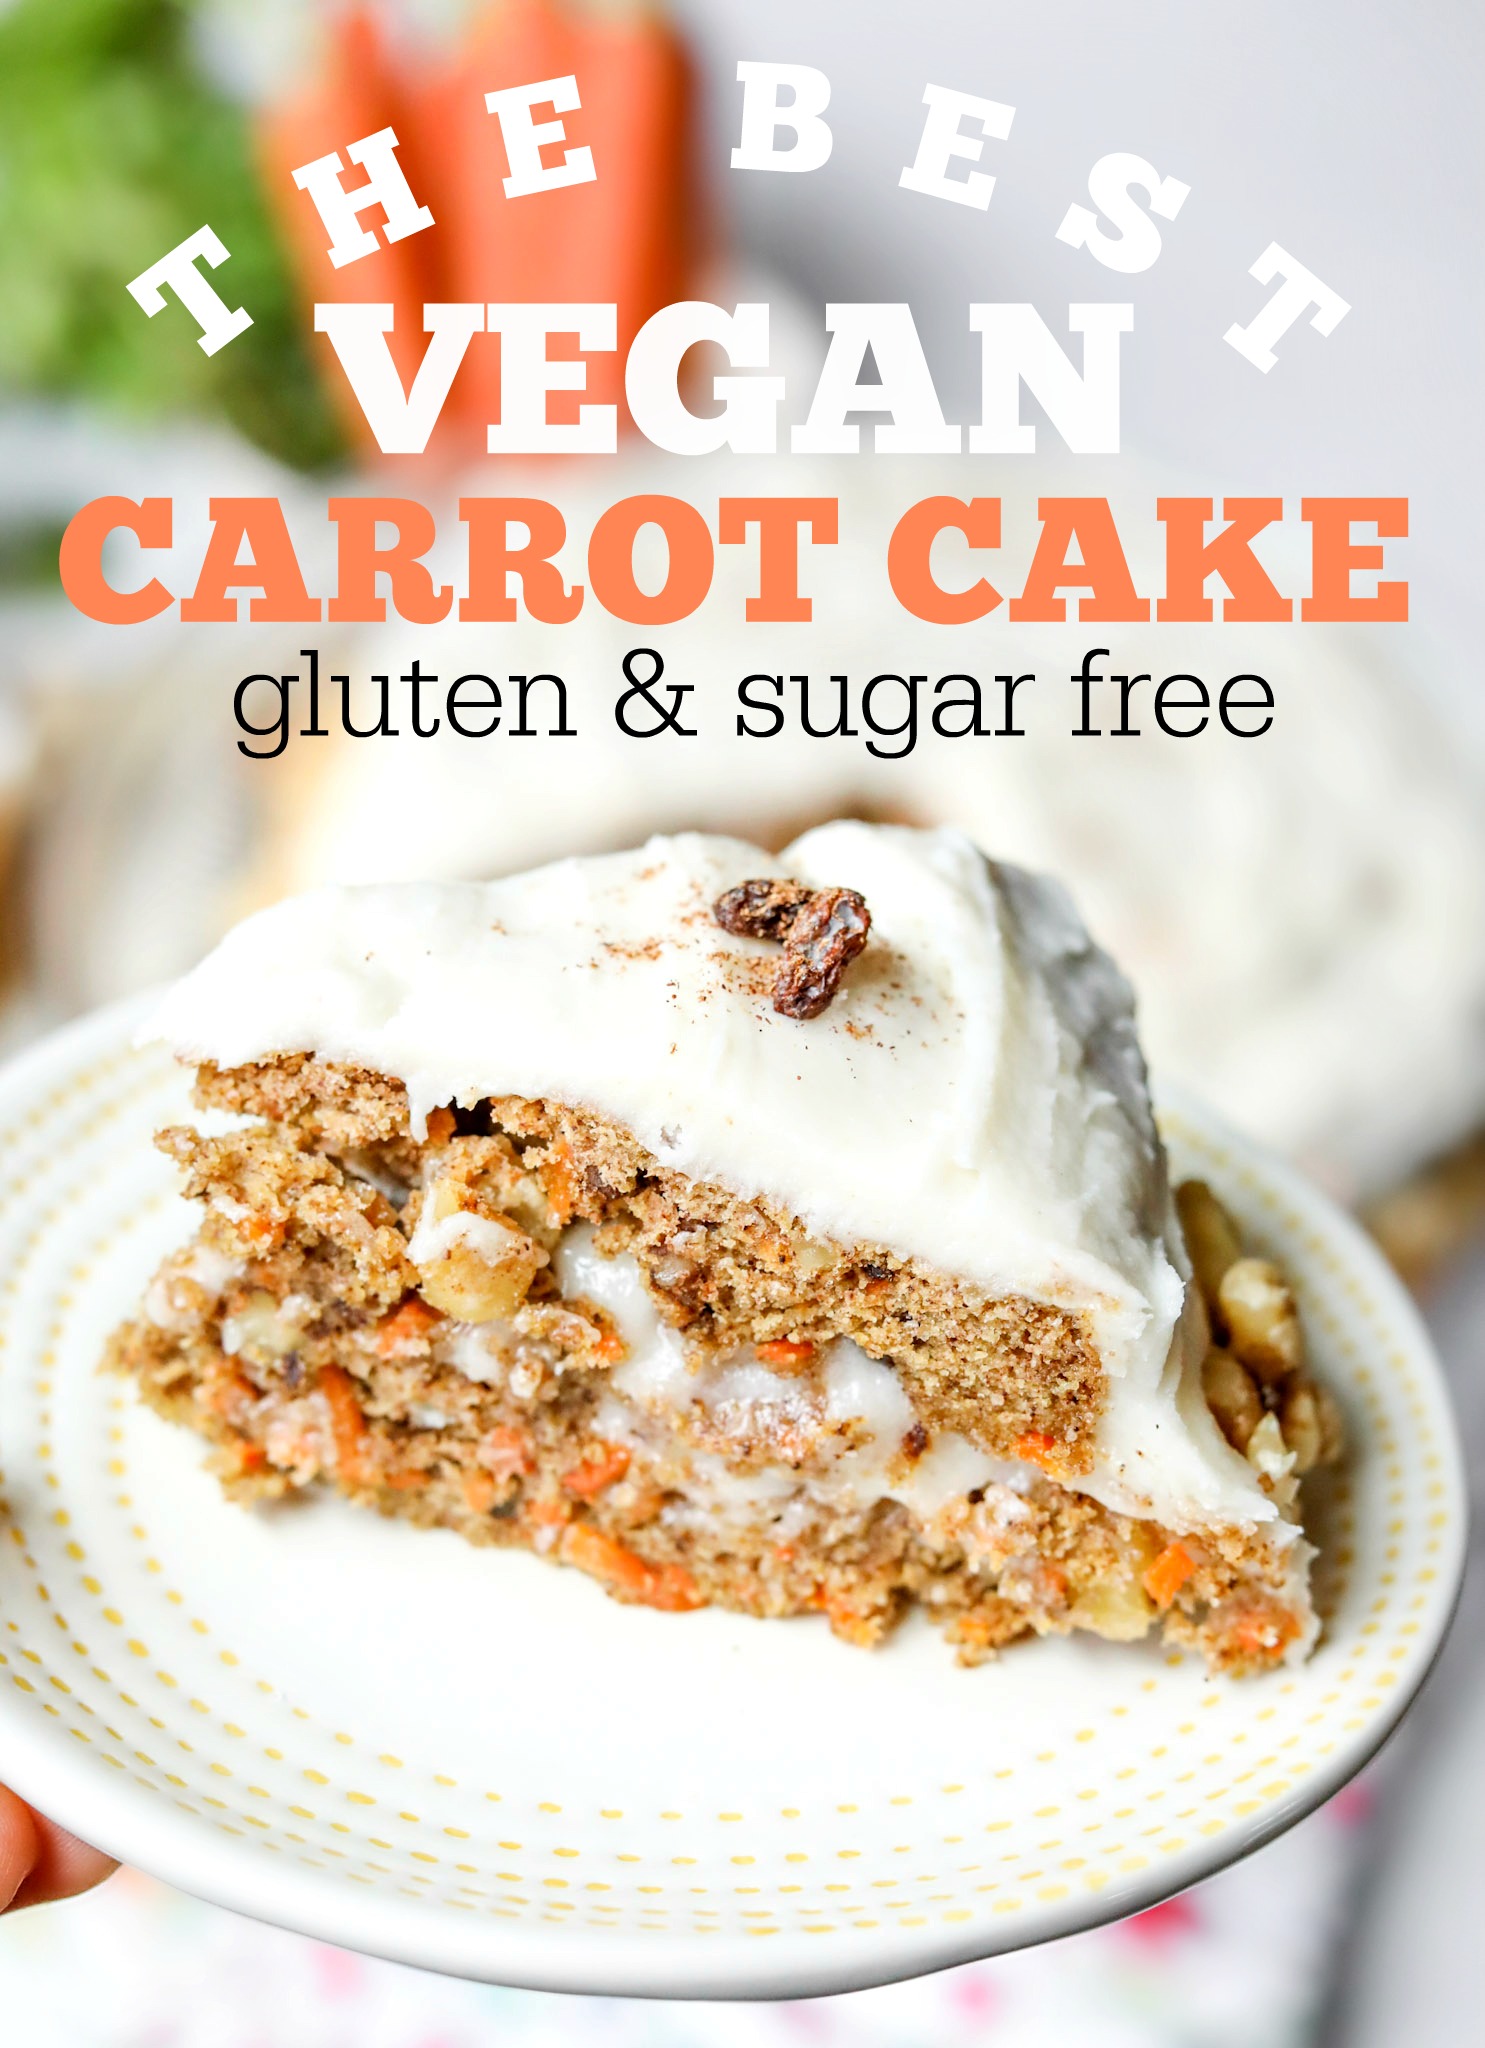 The Best Vegan Carrot Cake (Gluten Free & No Sugar)